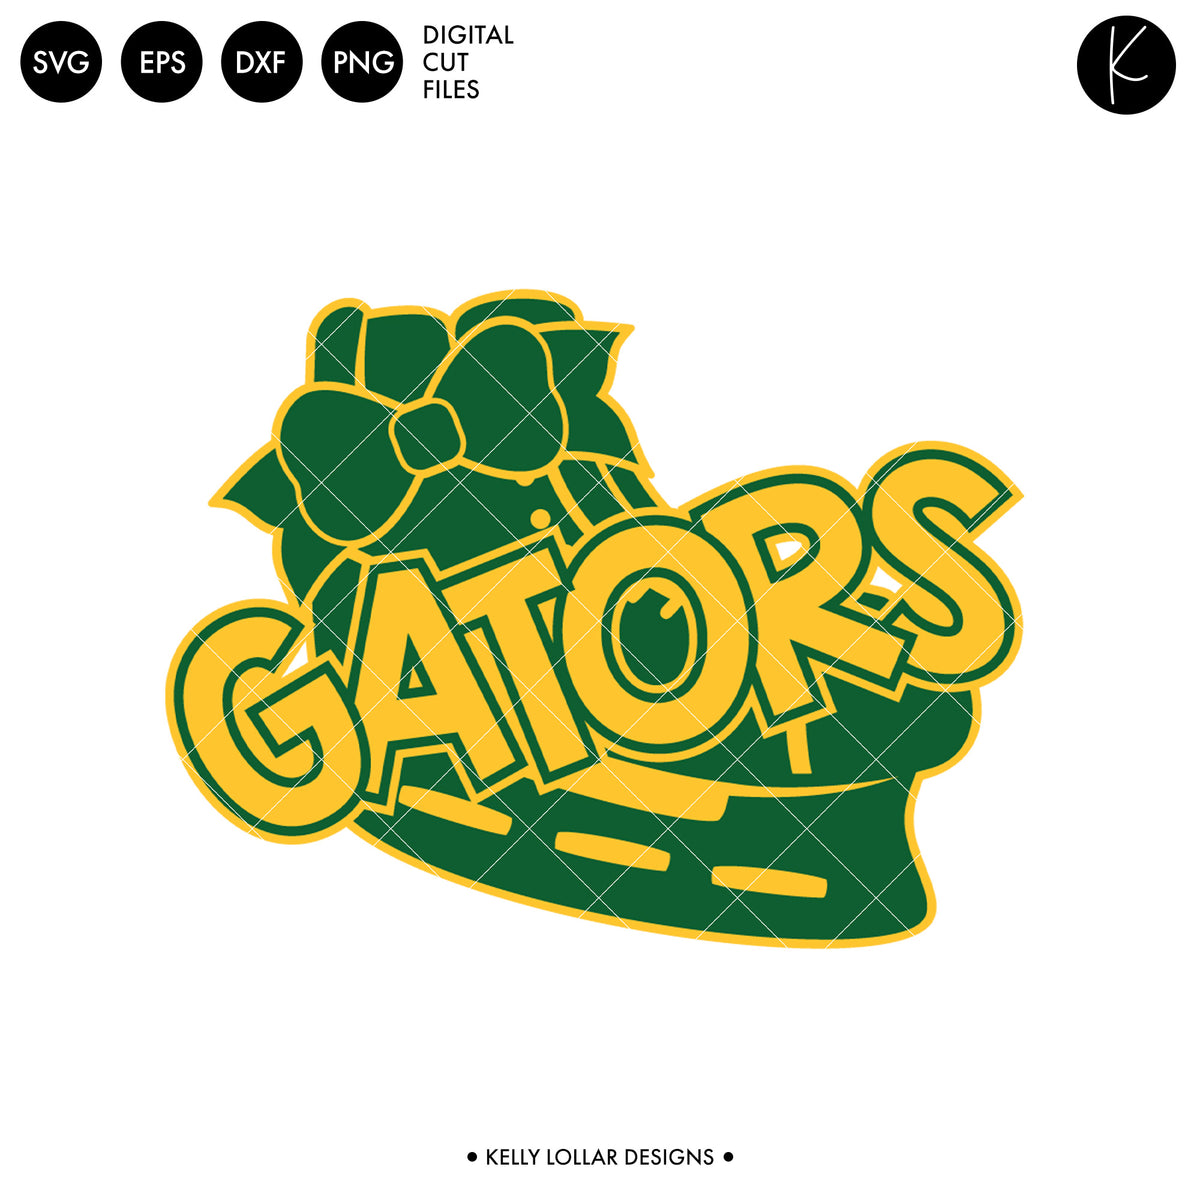 Gators Hockey Bundle | SVG DXF EPS PNG Cut Files